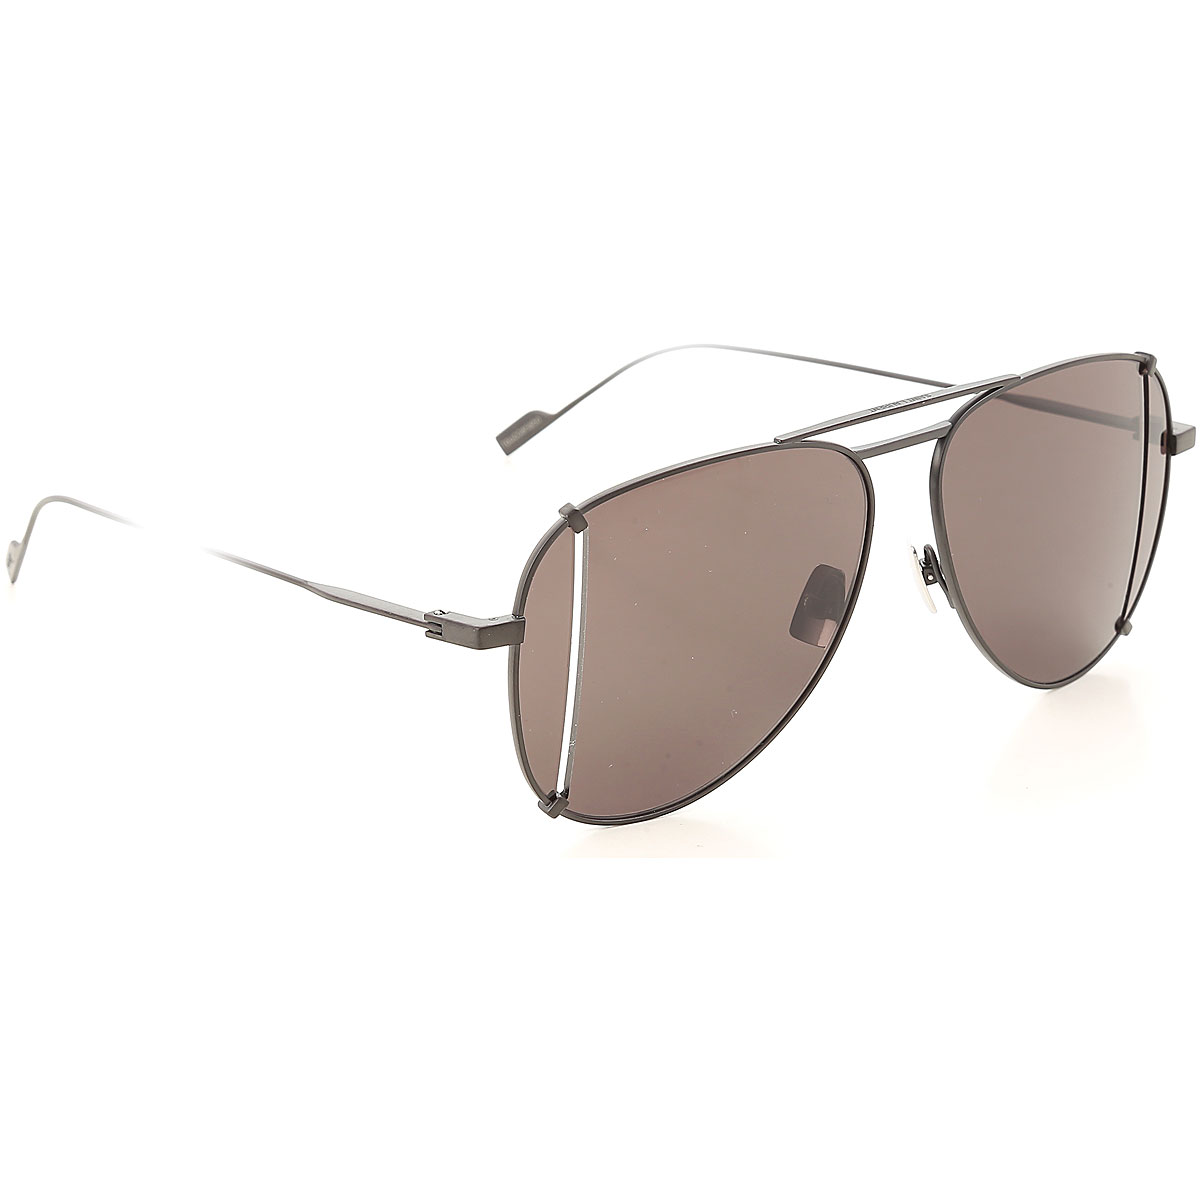 Sunglasses Saint Laurent, Style code: sl193-cut-002